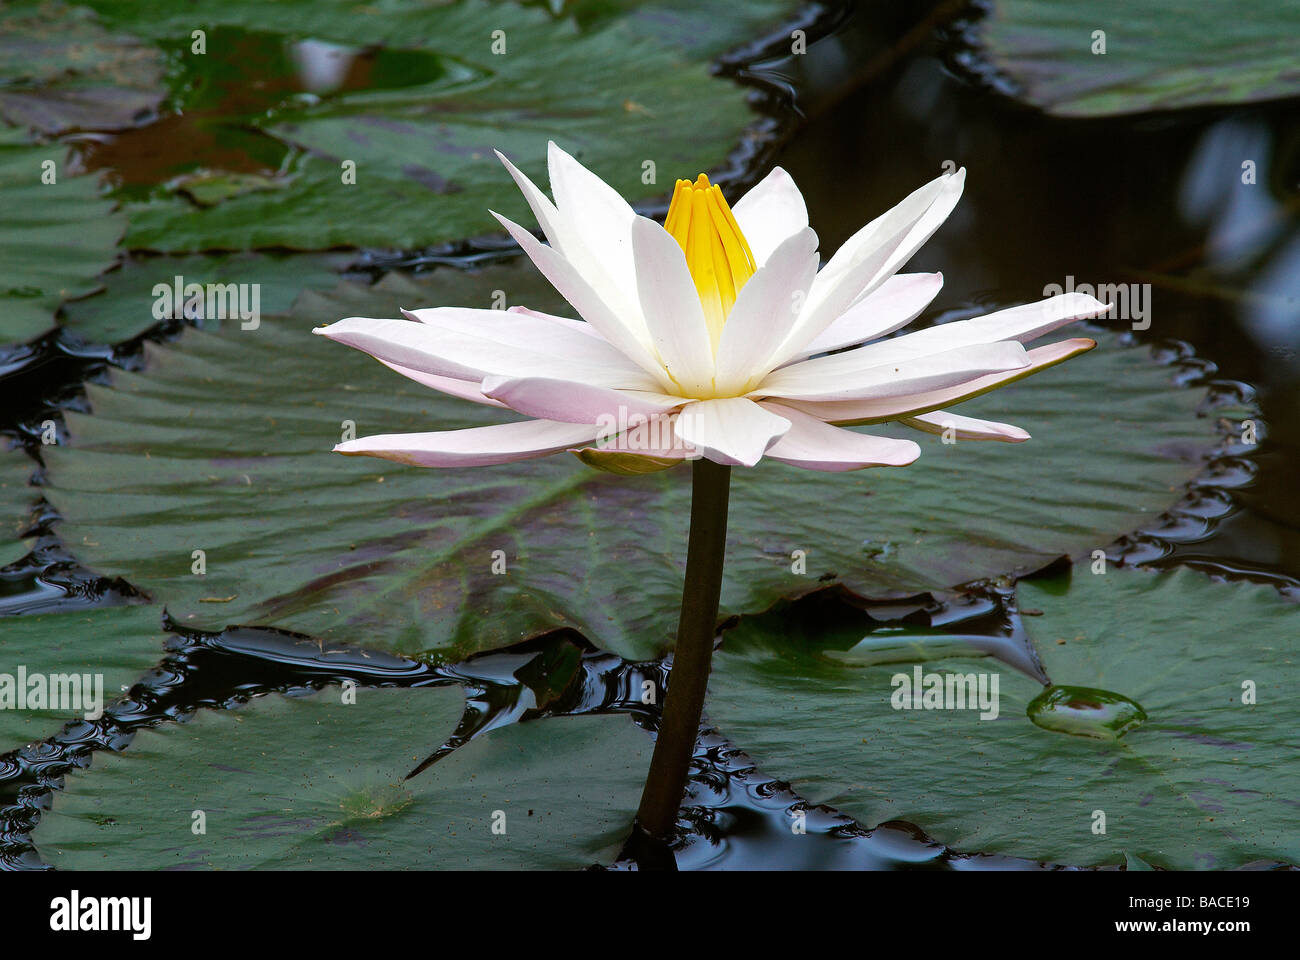 Indonesia, Bali, lotus flower Stock Photo - Alamy